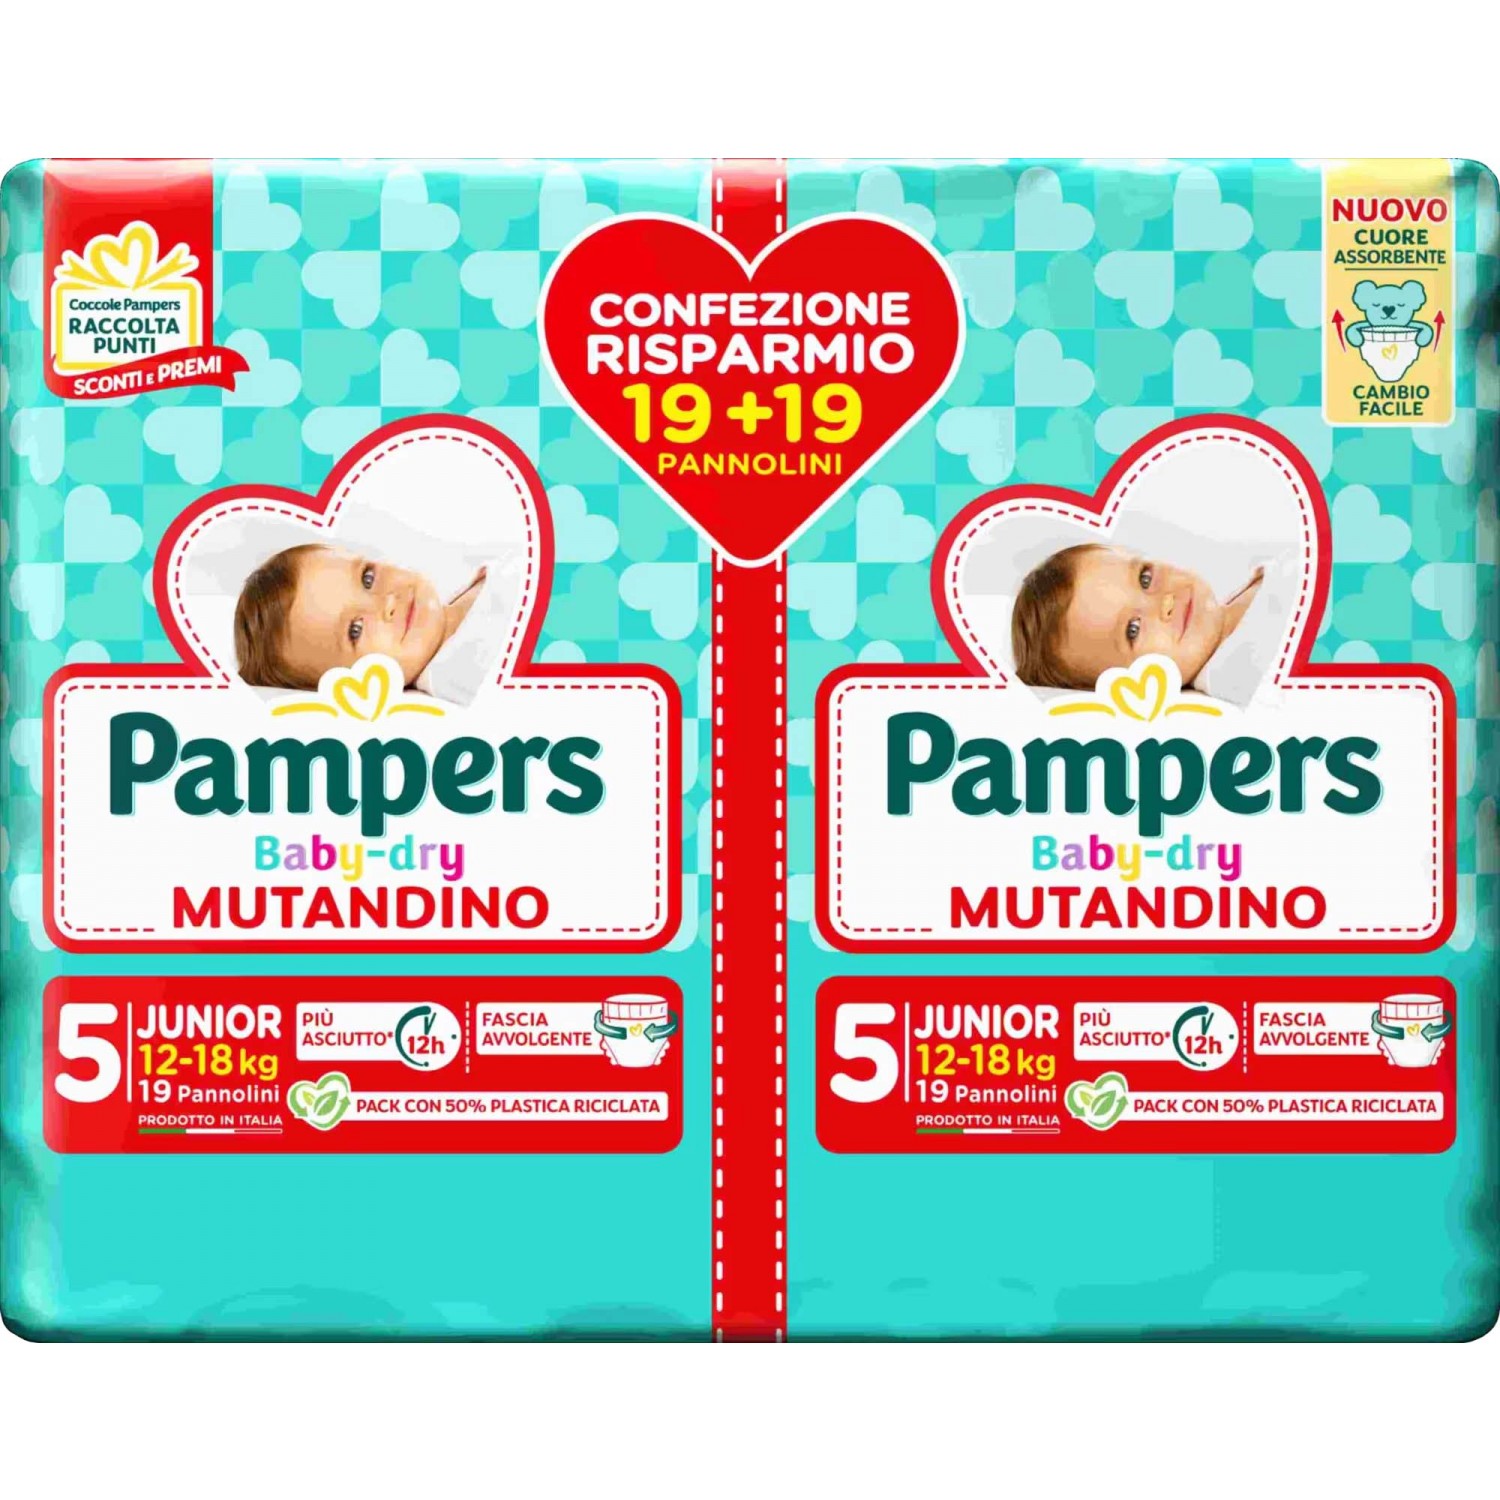 Bipack Pannolini Pampers Baby Dry Mutandino JUNIOR 12-18 Kg Misura 5 (38pz) von Pampers